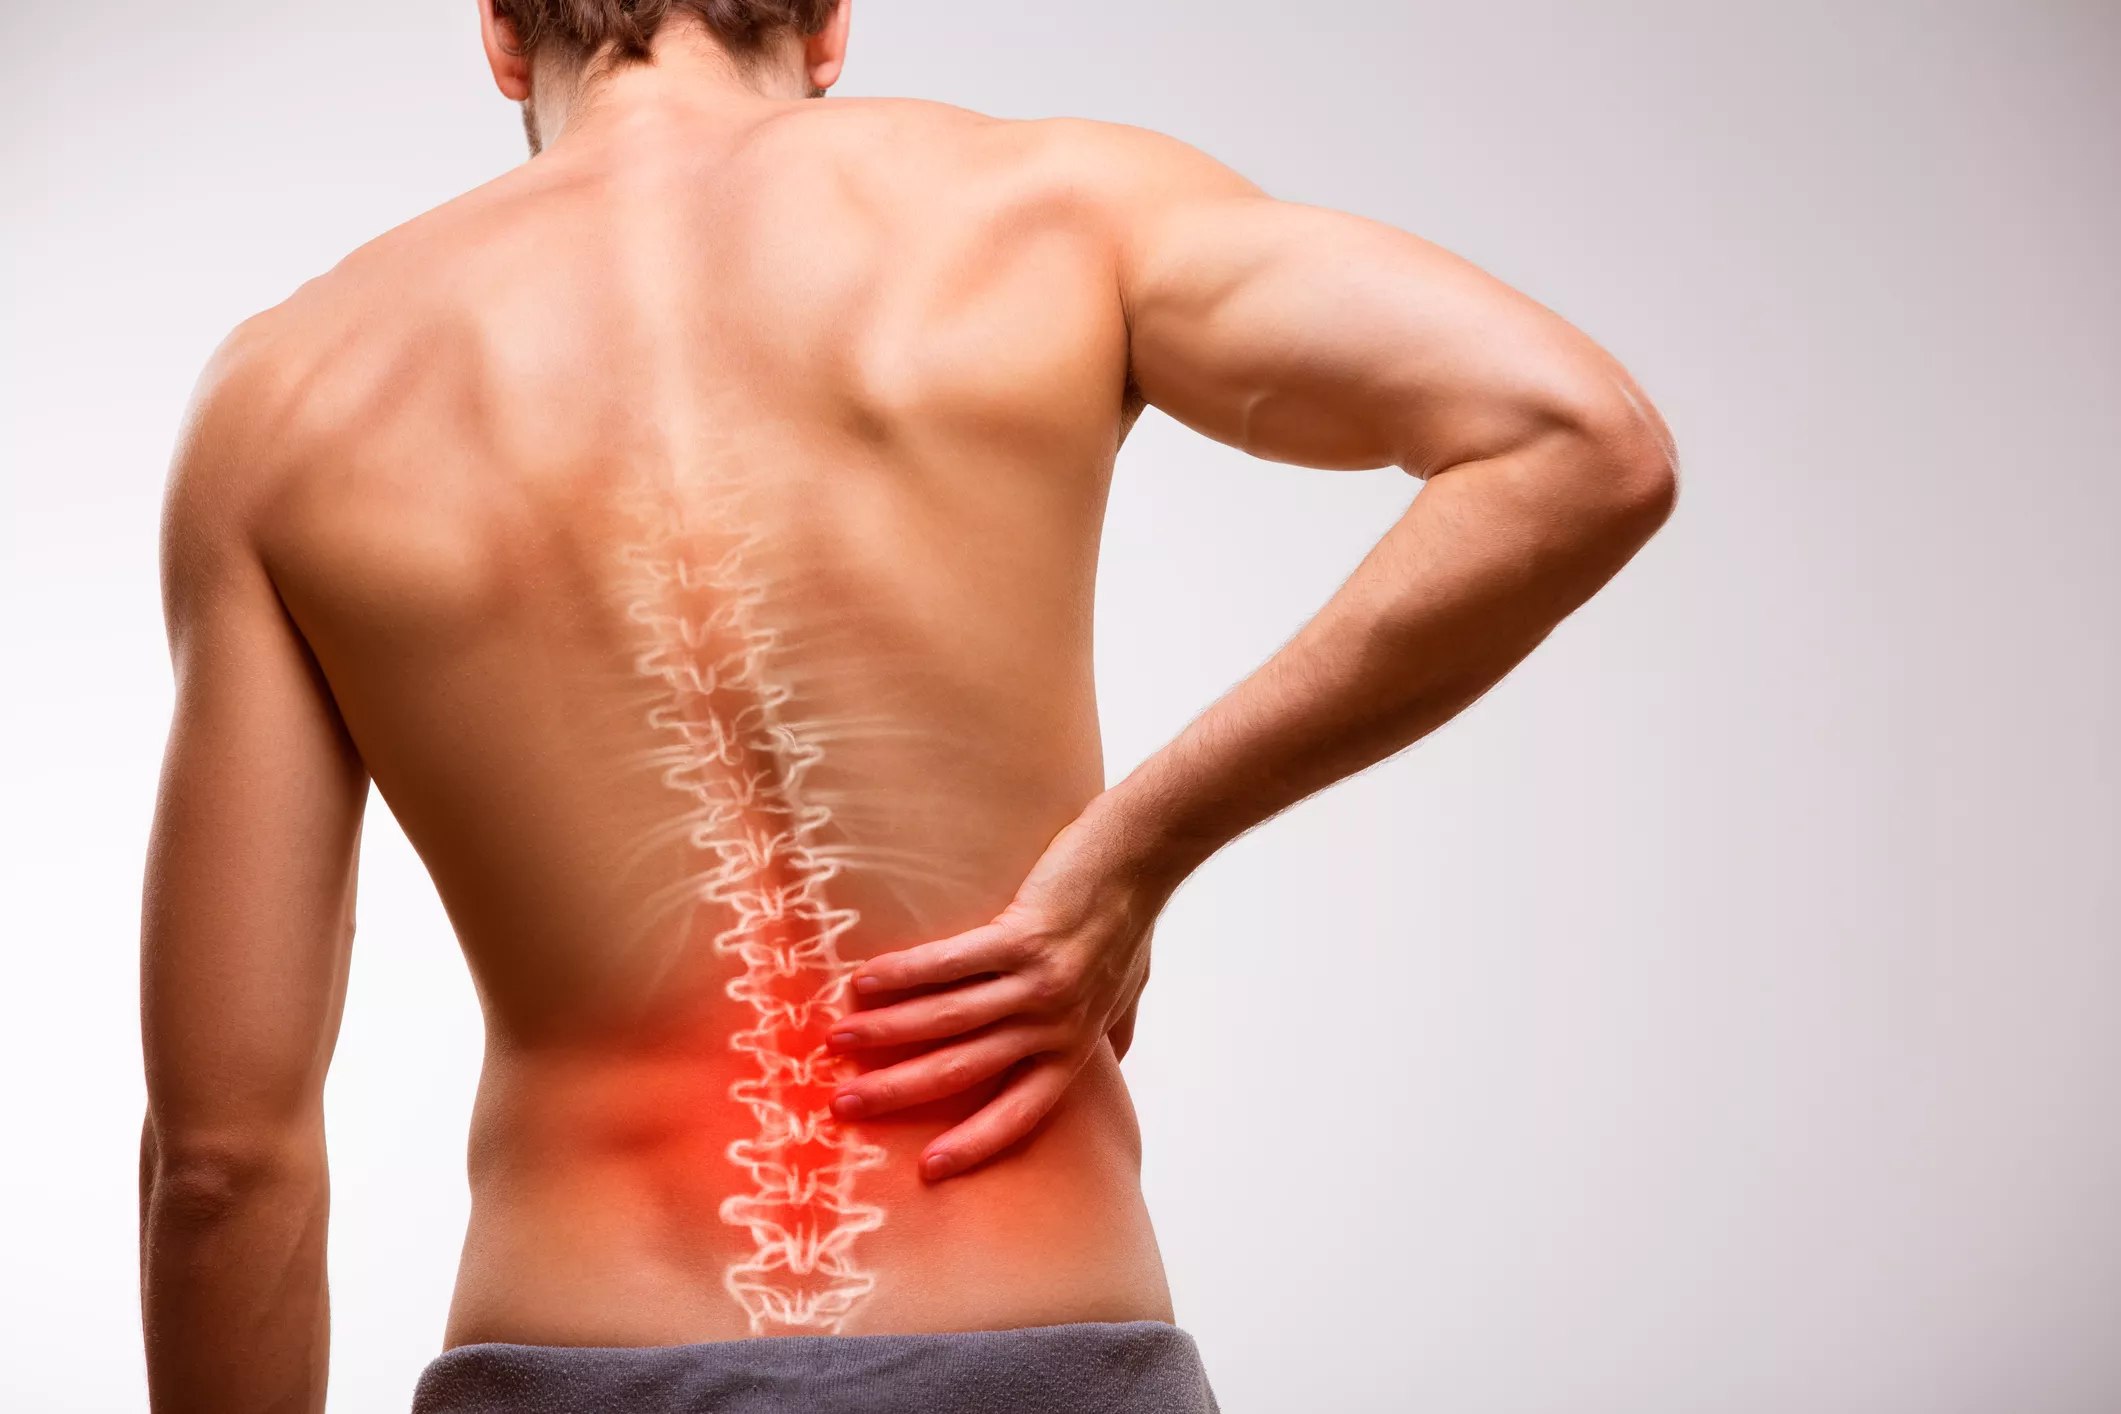 Lumbar Burst Fracture, Spinal Injury from Trauma